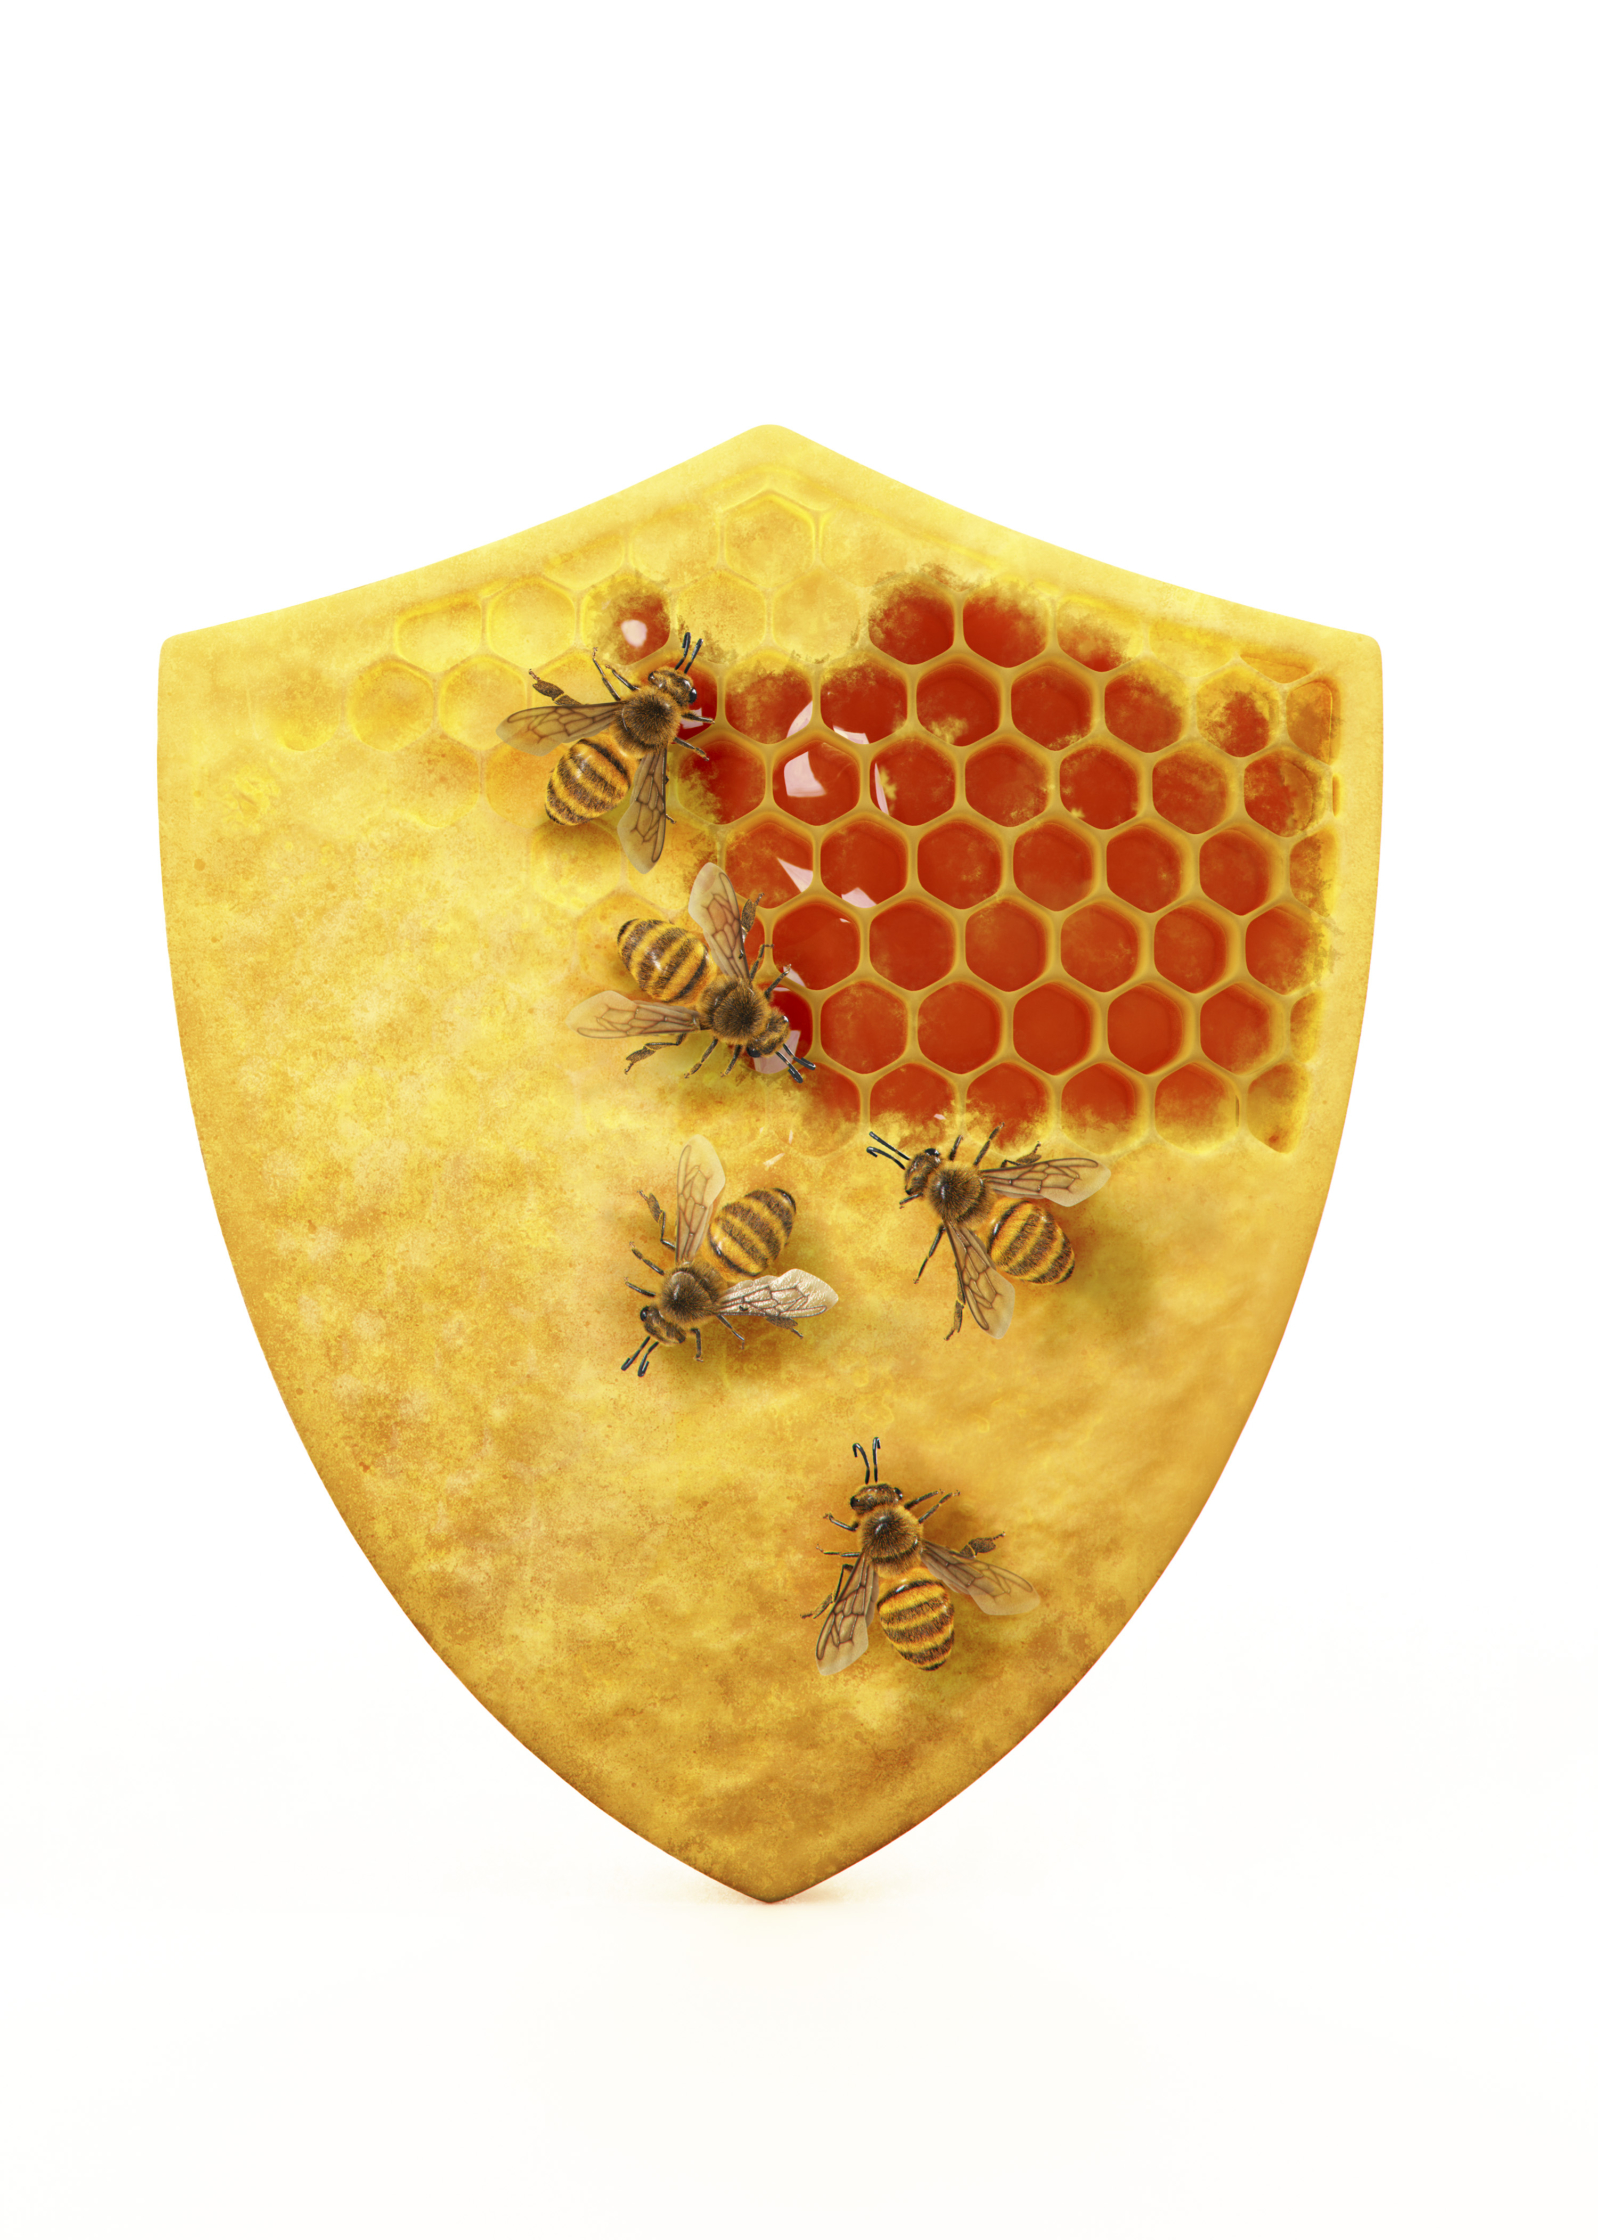 Honeycomb Security Bees Honey Men's Health Magazine